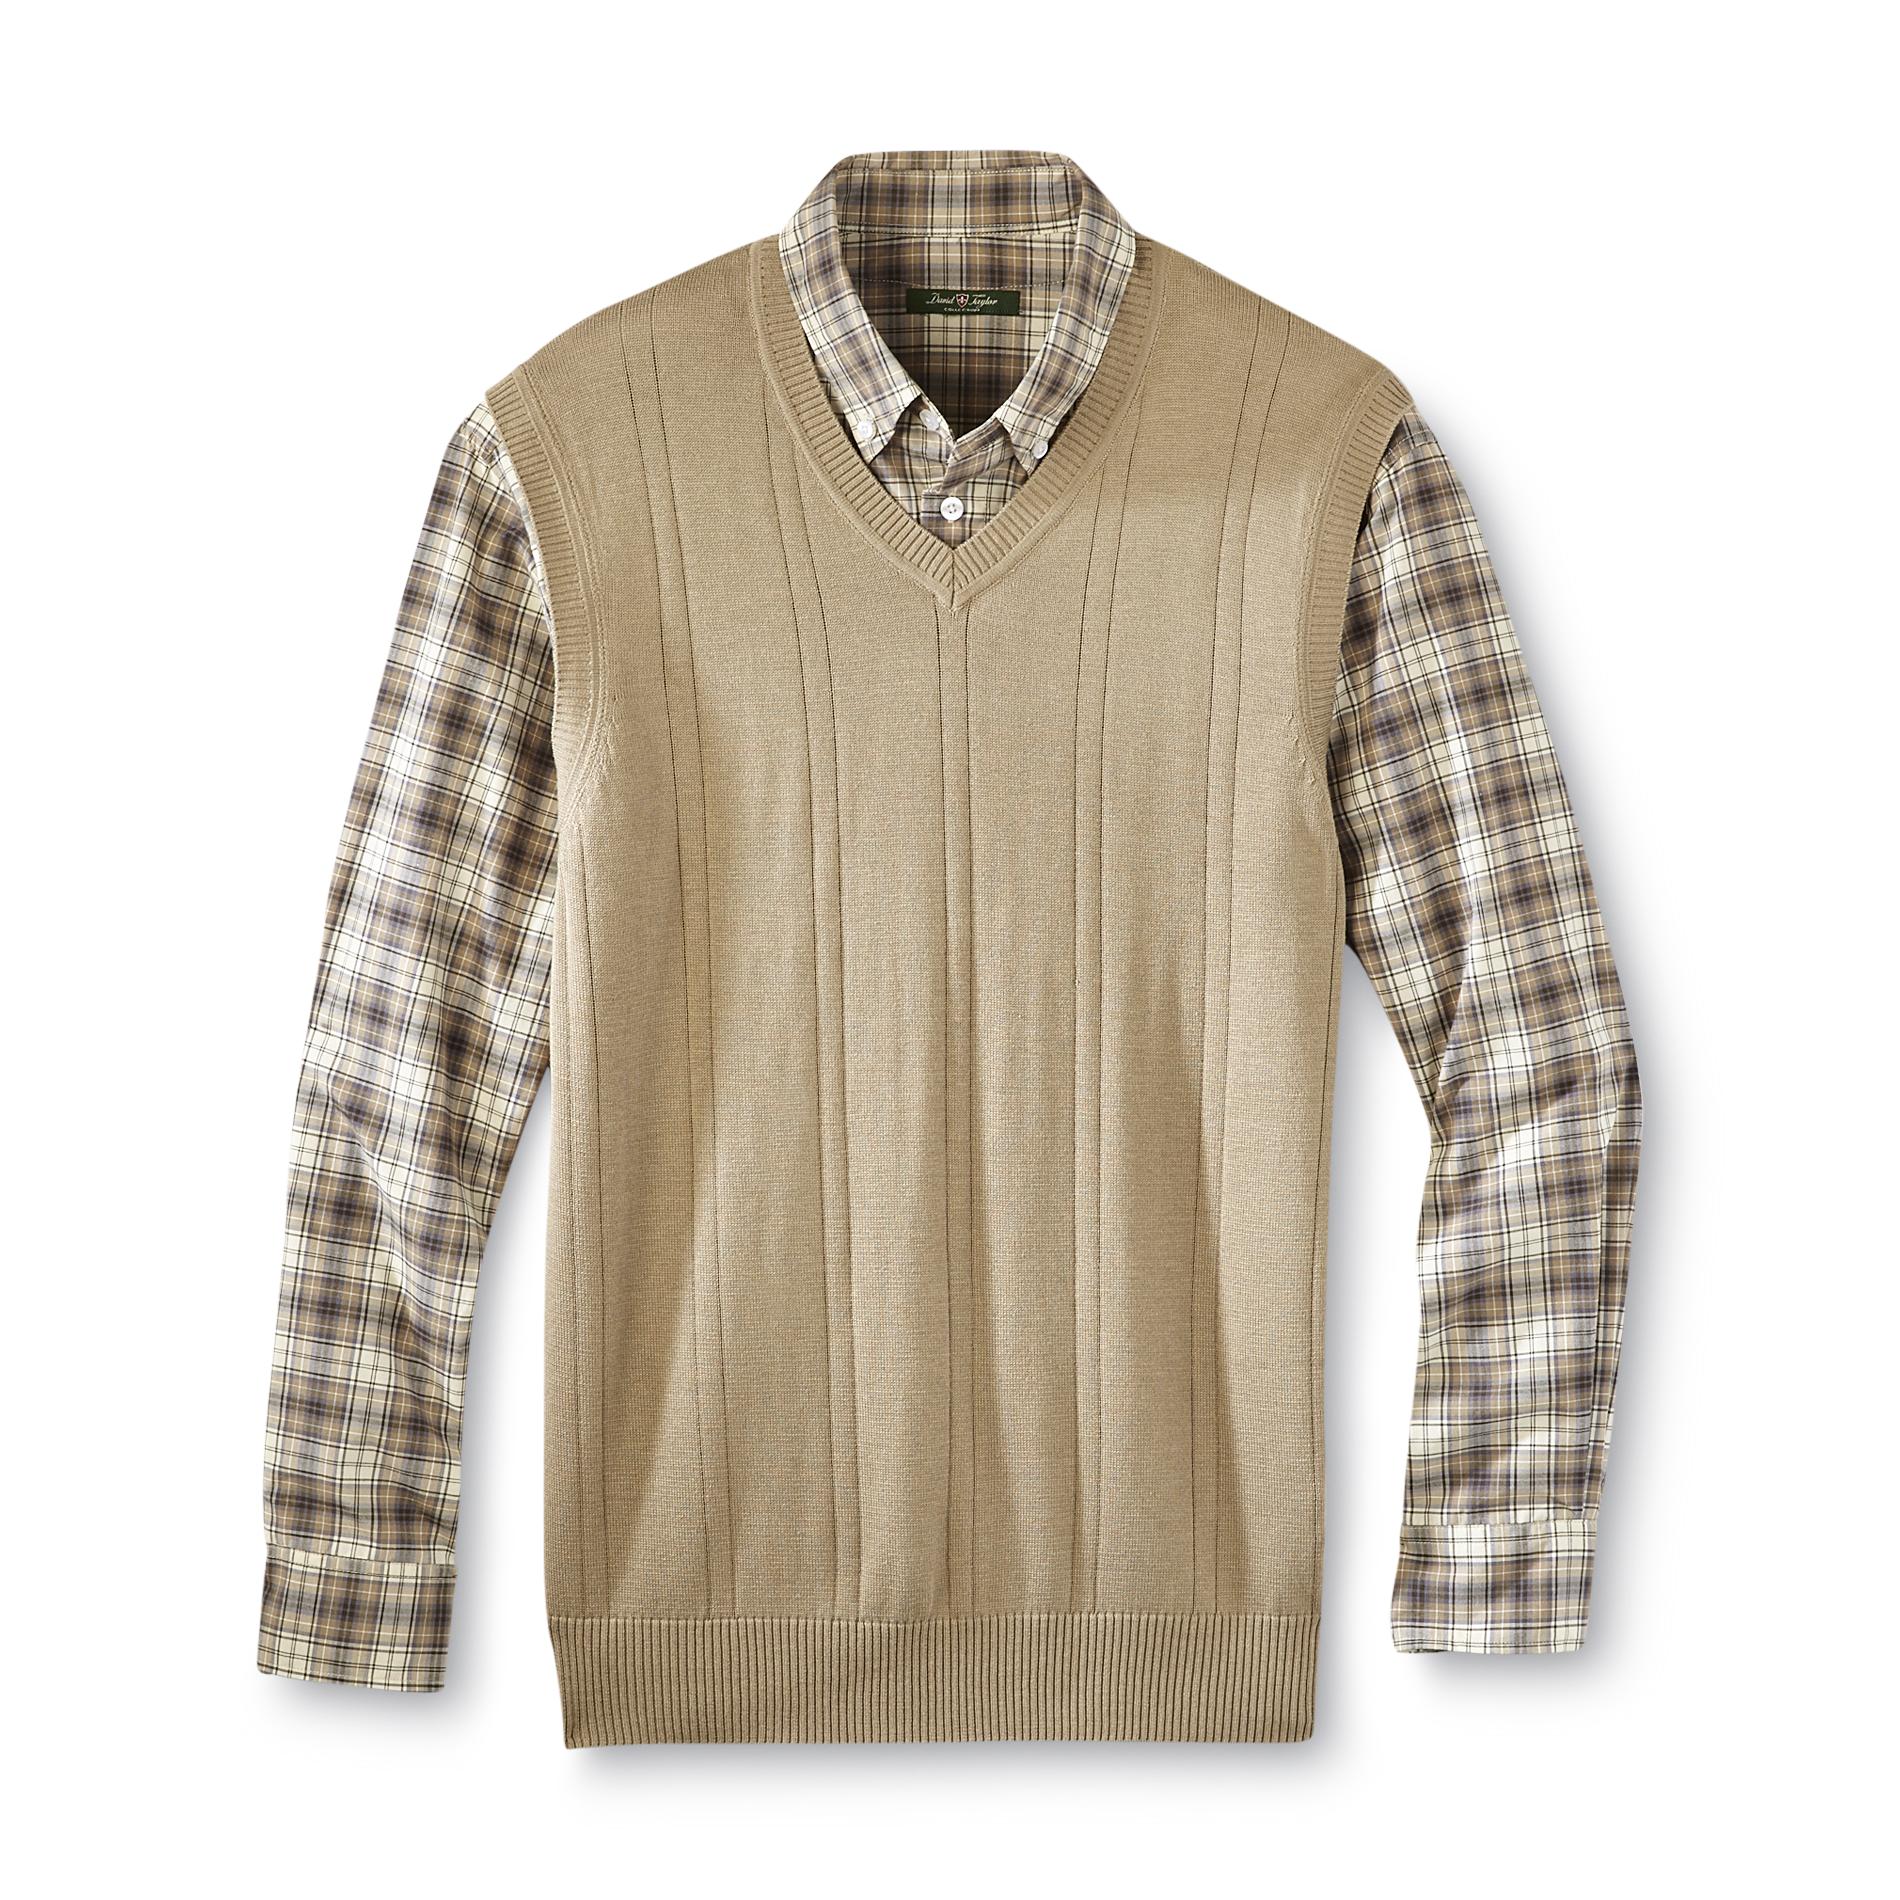 David Taylor Collection Men's Layered Look Sweater Vest & Dress Shirt